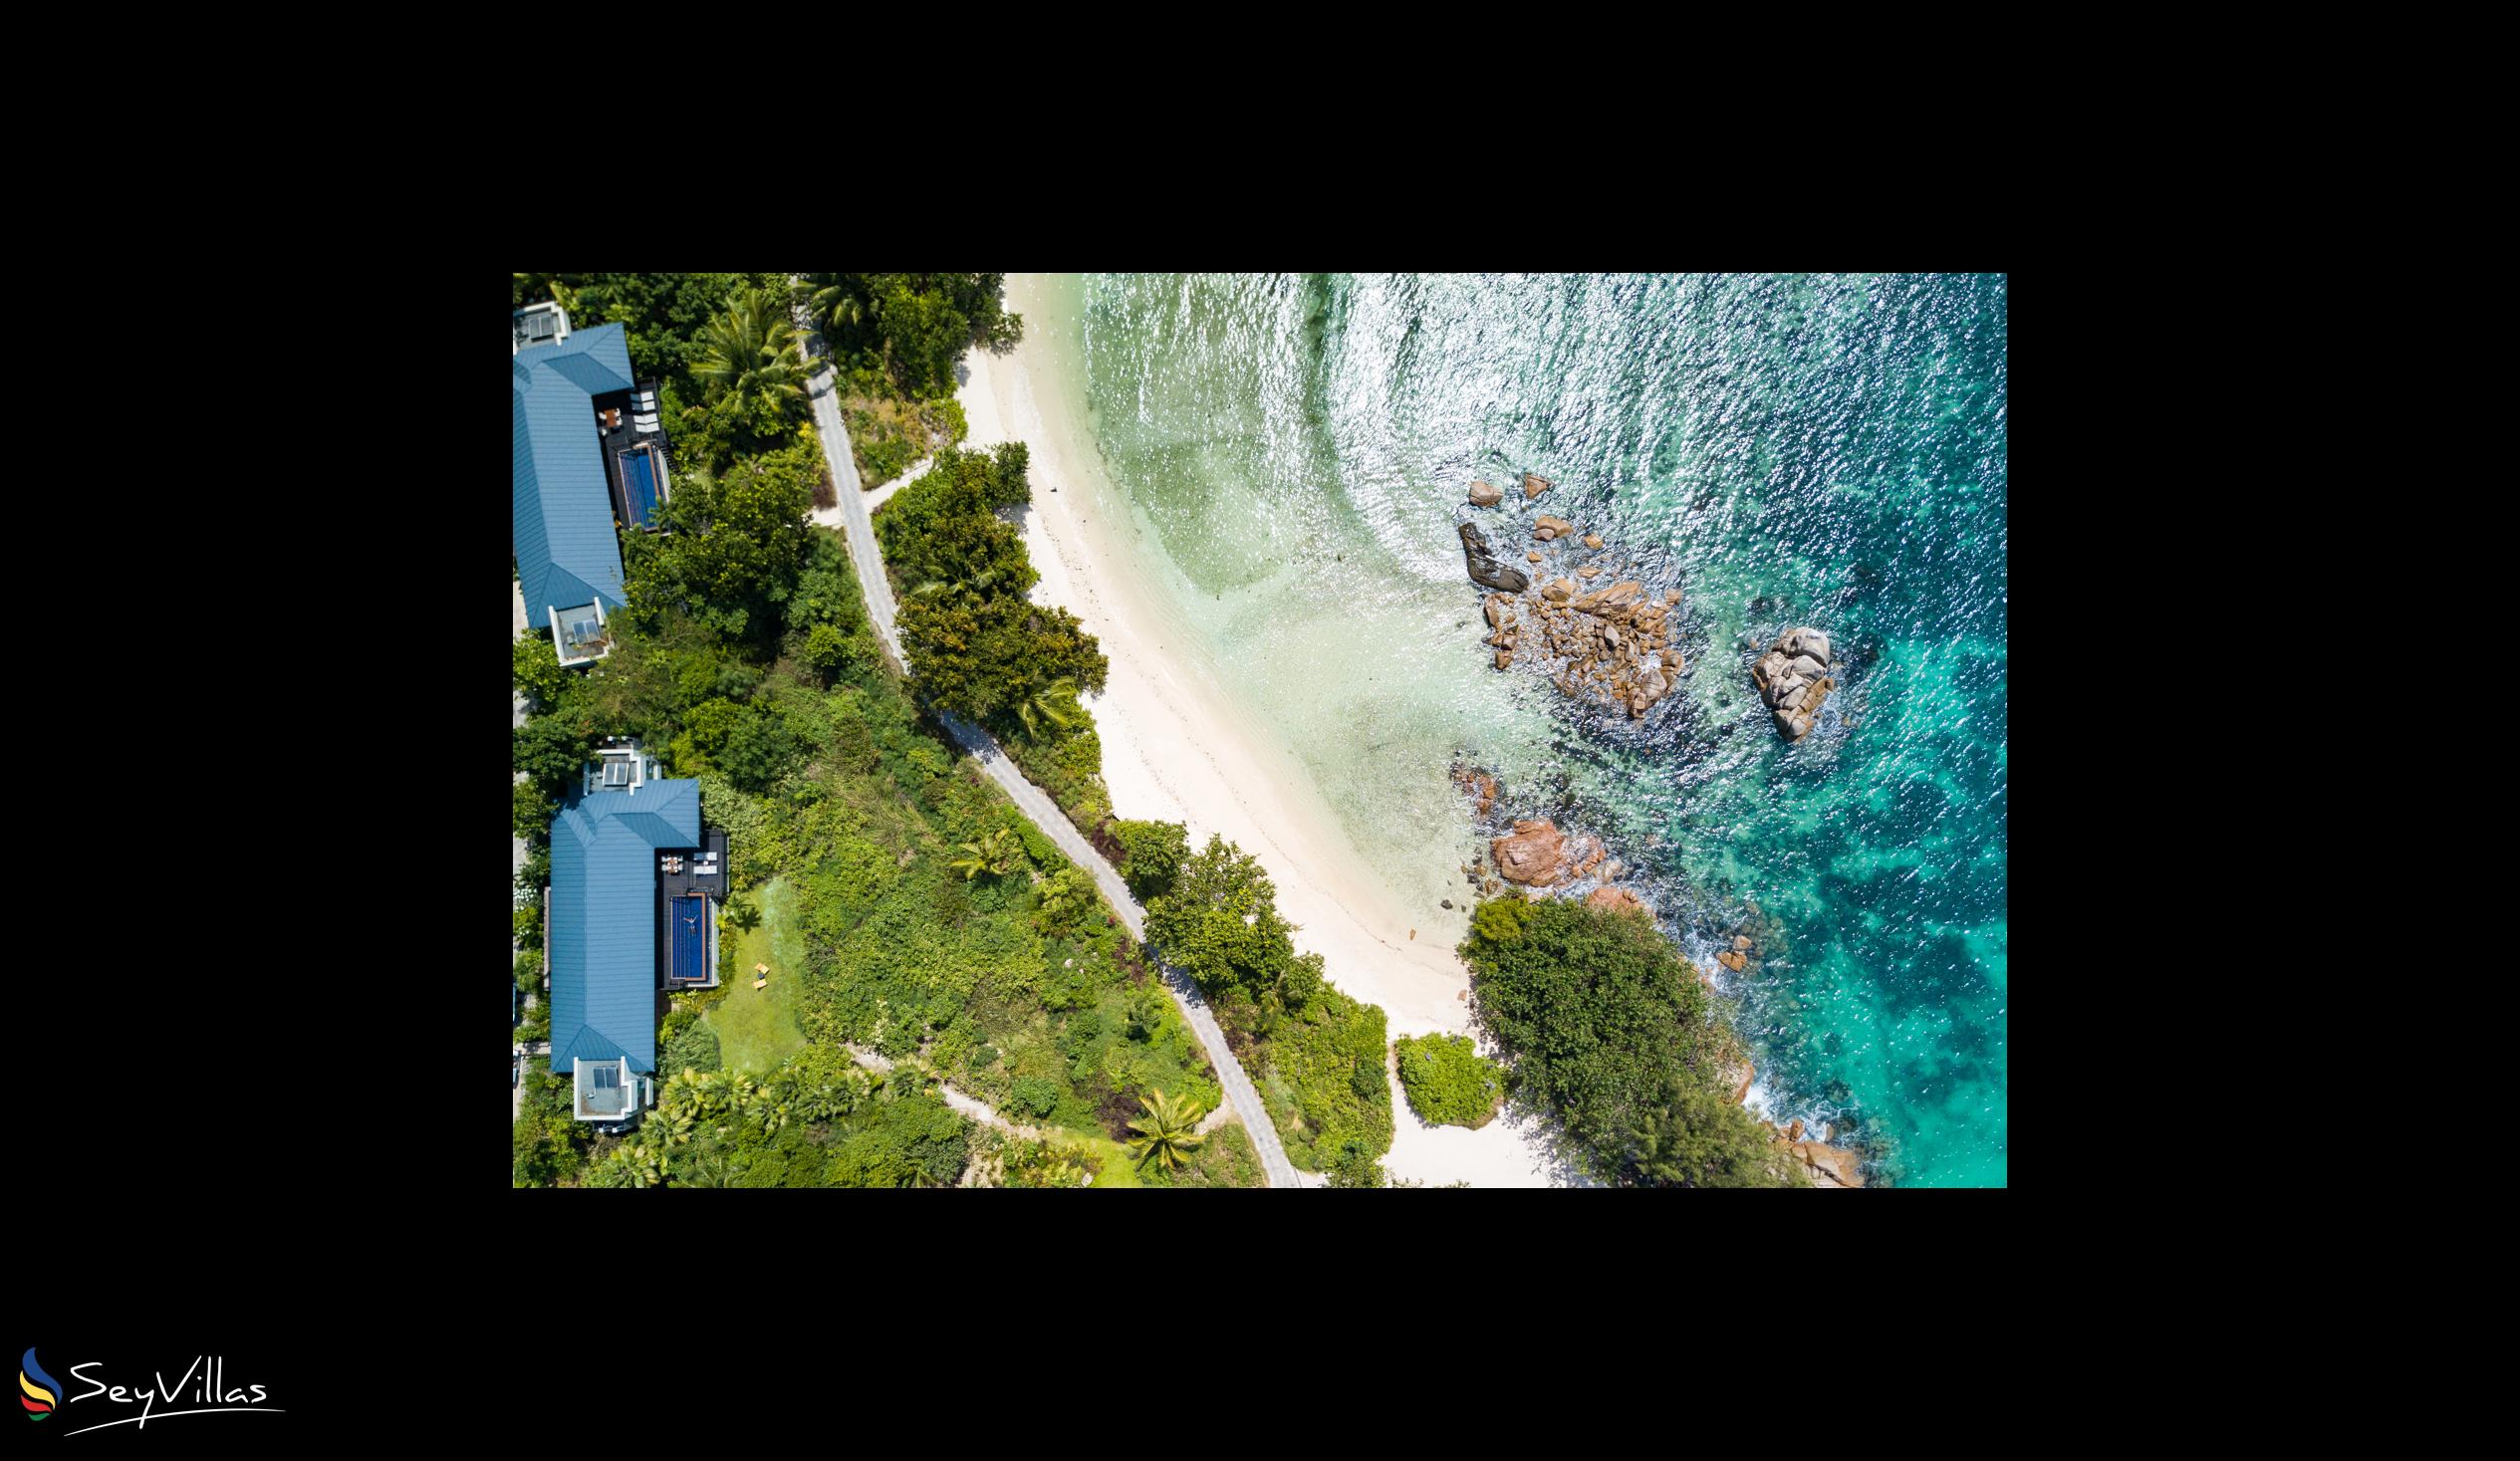 Photo 83: Raffles - 2-Bedroom Beachfront Pool Villa - Praslin (Seychelles)